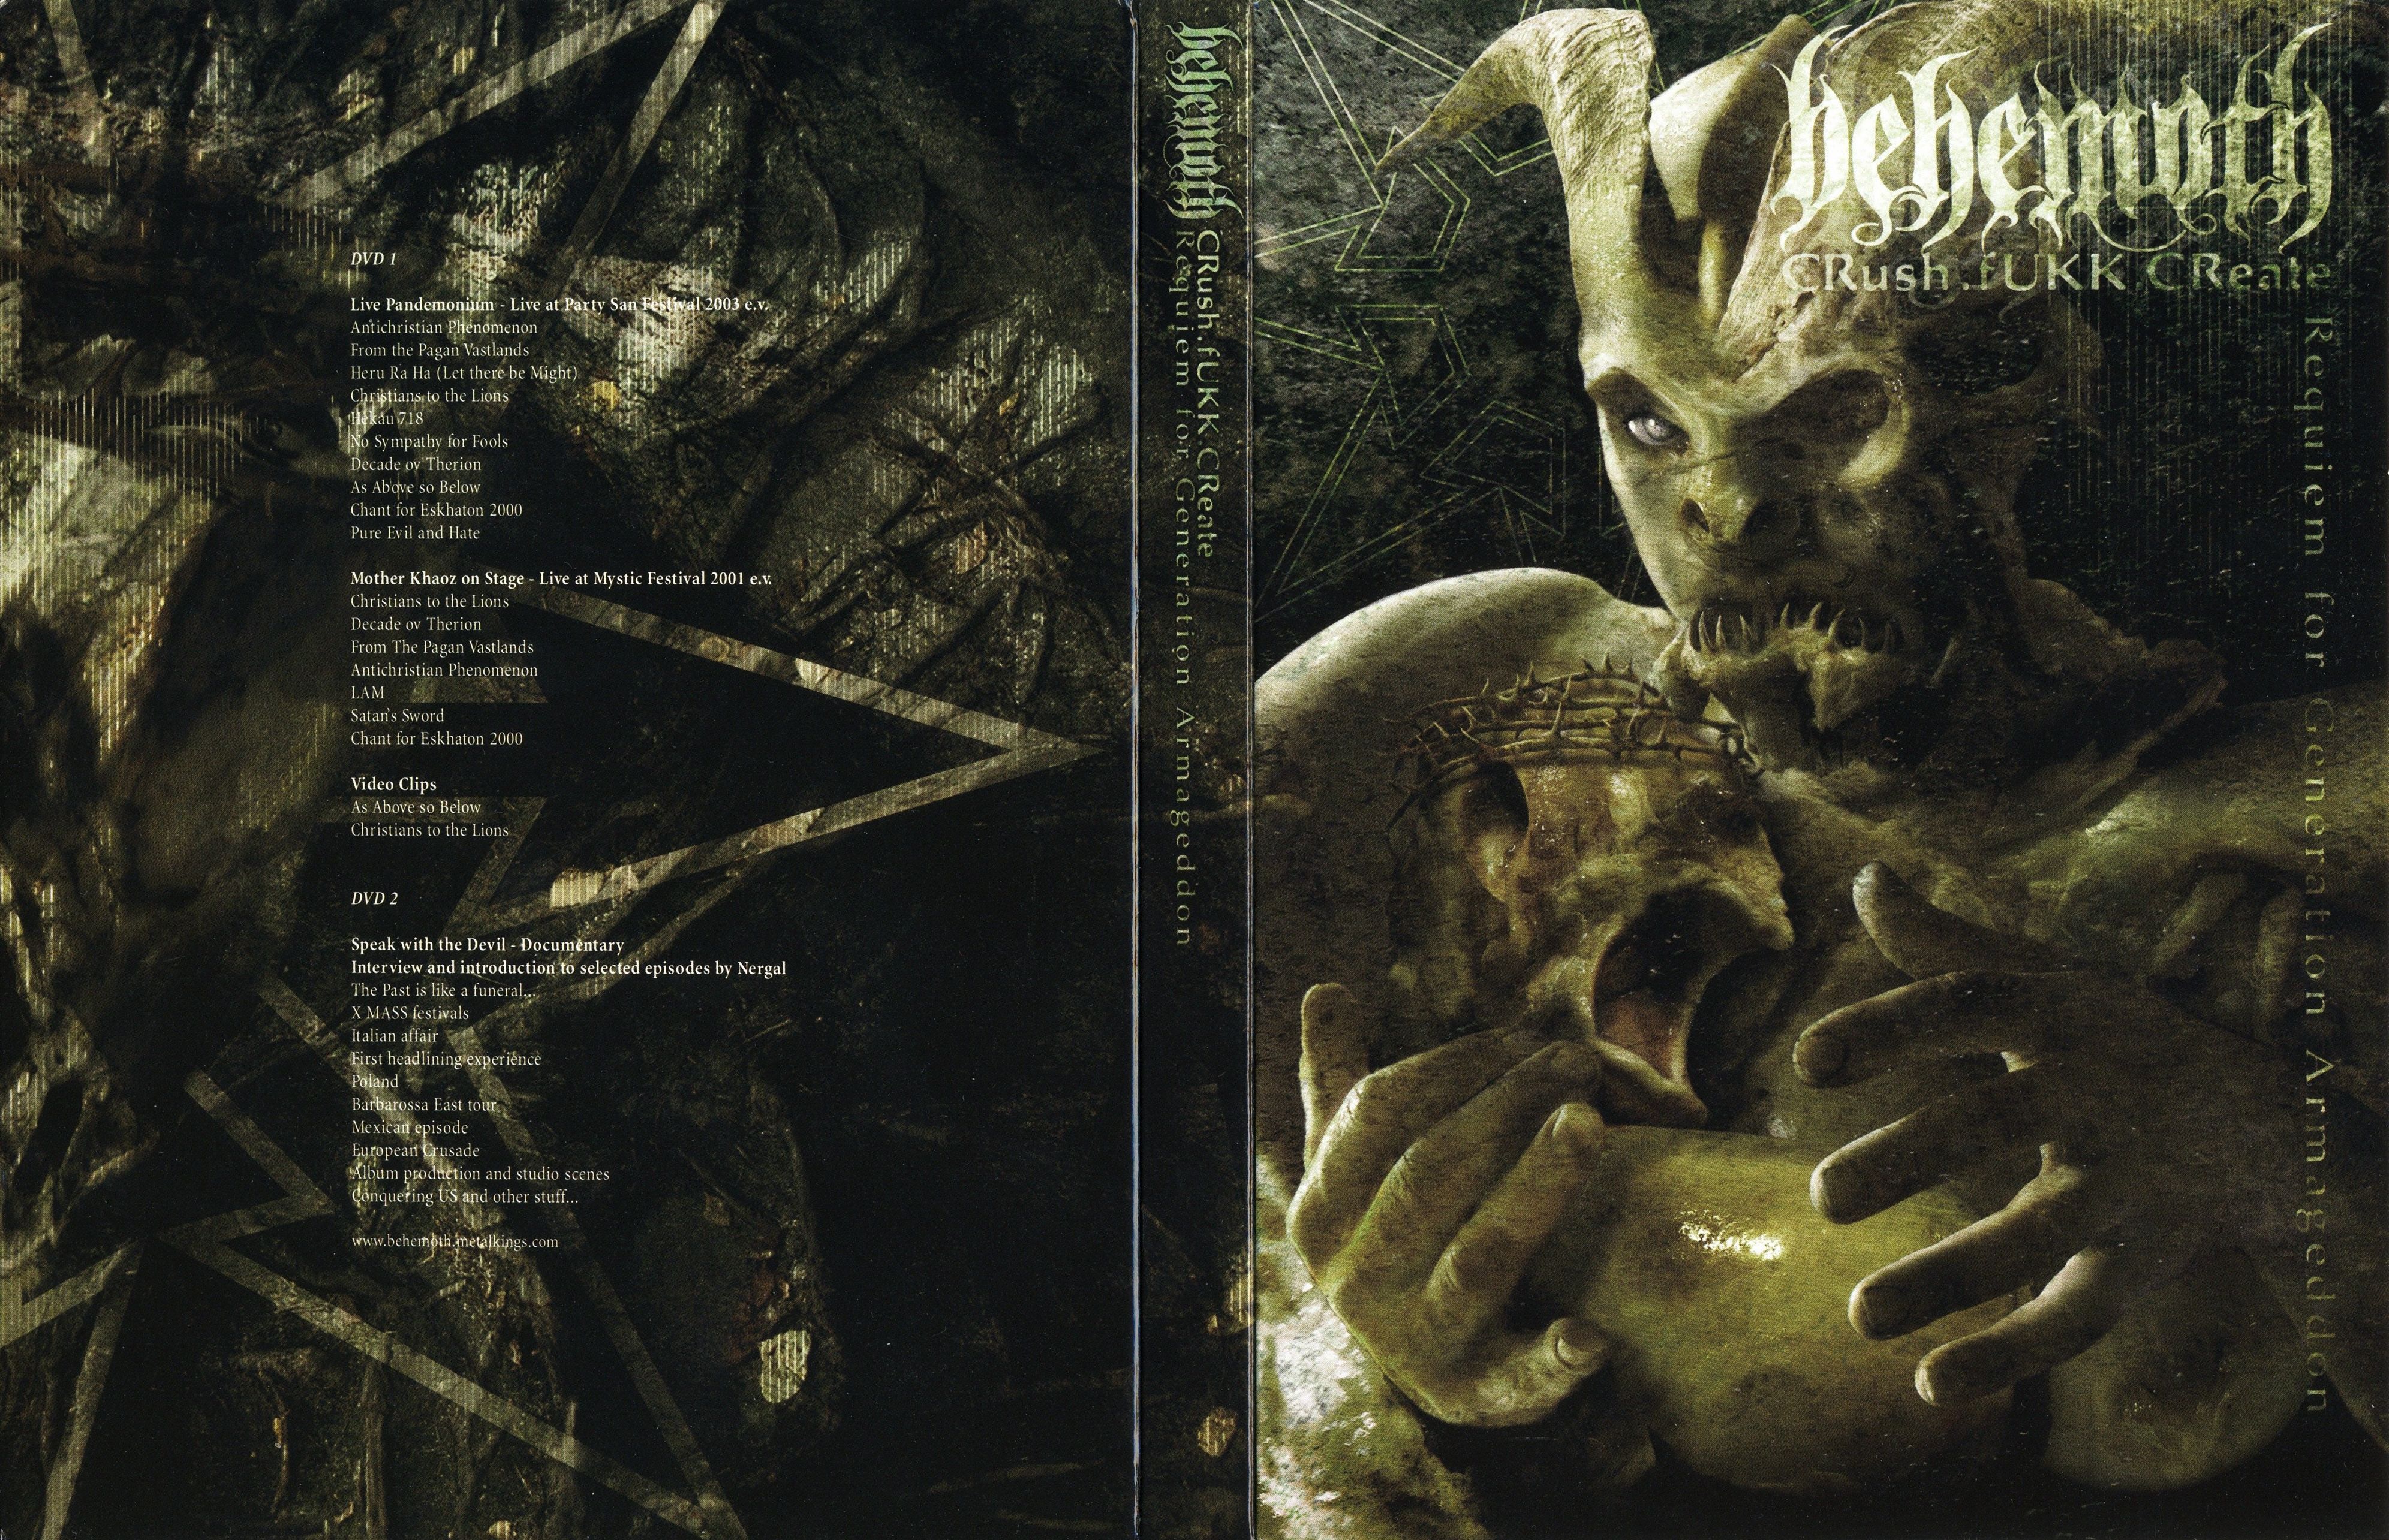 covery DVD - Behemoth - CRush.fUKK.CReate Requiem For Generation Armageddon - Cover.jpg